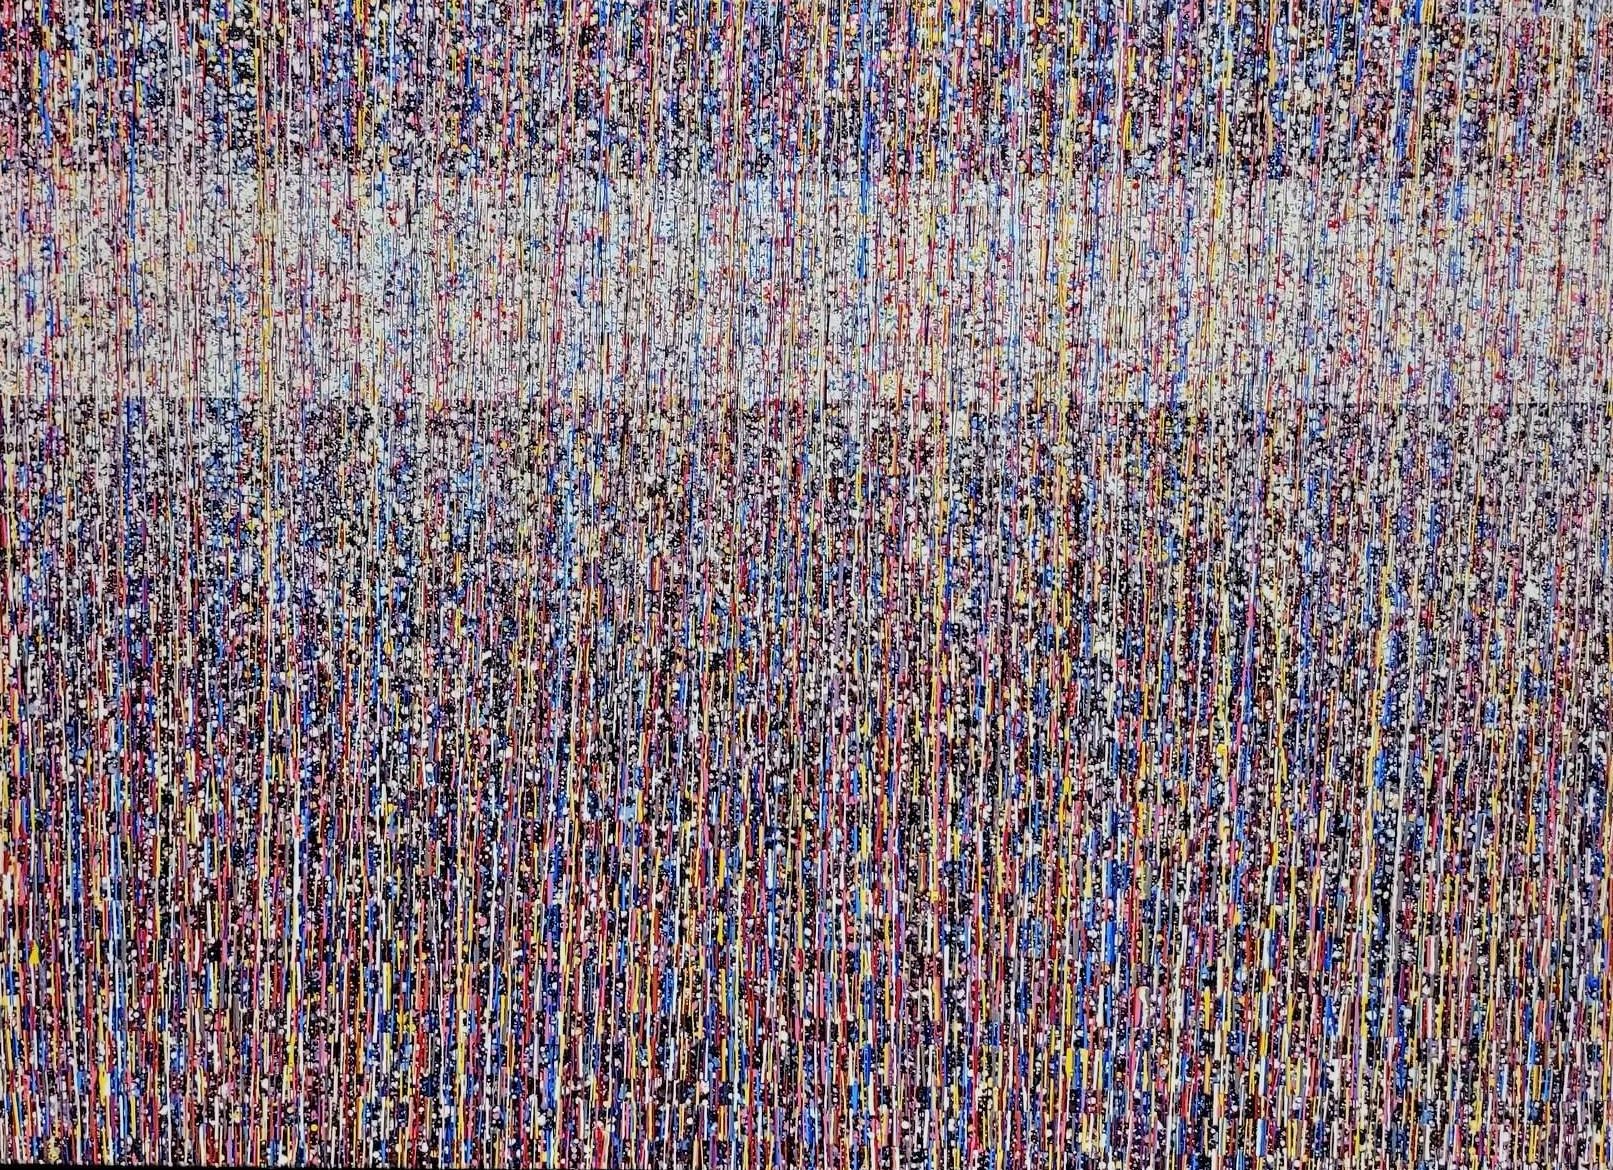 SOMSAK HANUMAS "海妖"。2023
画布上的丙烯酸和漆 
黑色美式盒子框架
120 x 160厘米

艺术家的主要展览 ： 
2007年艺术论文与&hellip;